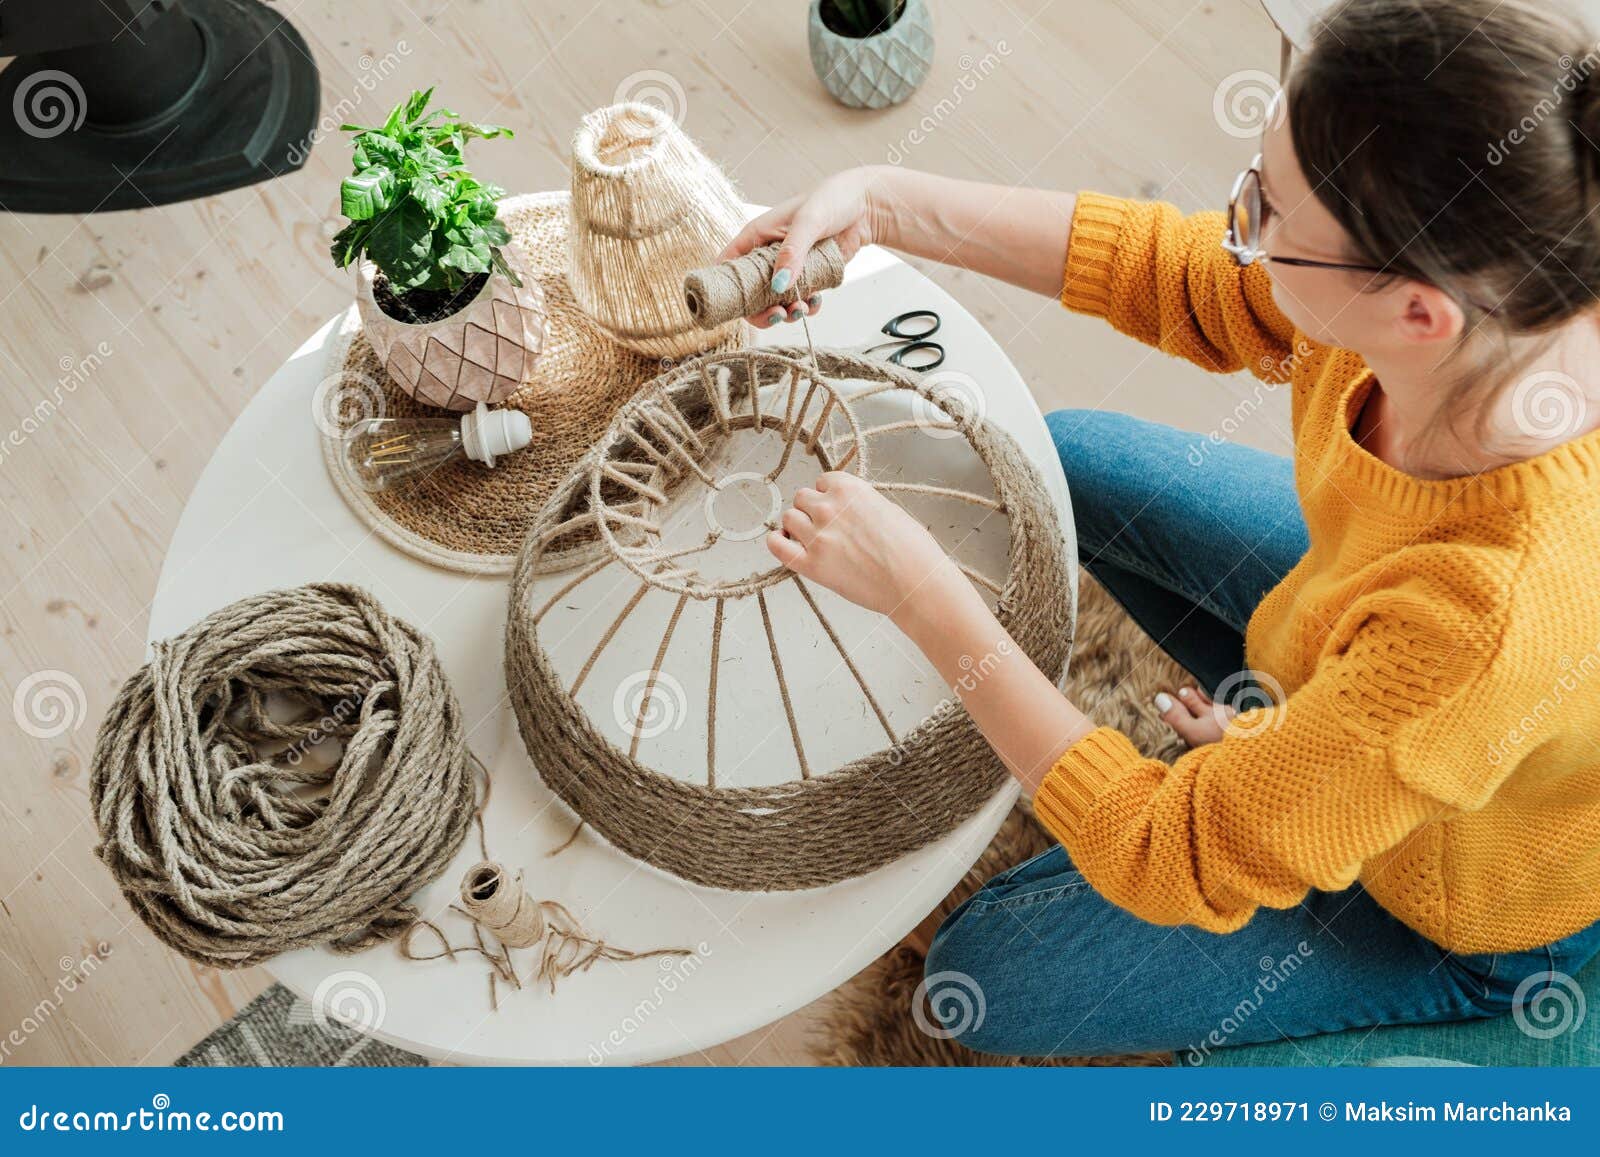 Woman Makes Handmade Diy Lamp from Jute Rope Stock Image - Image